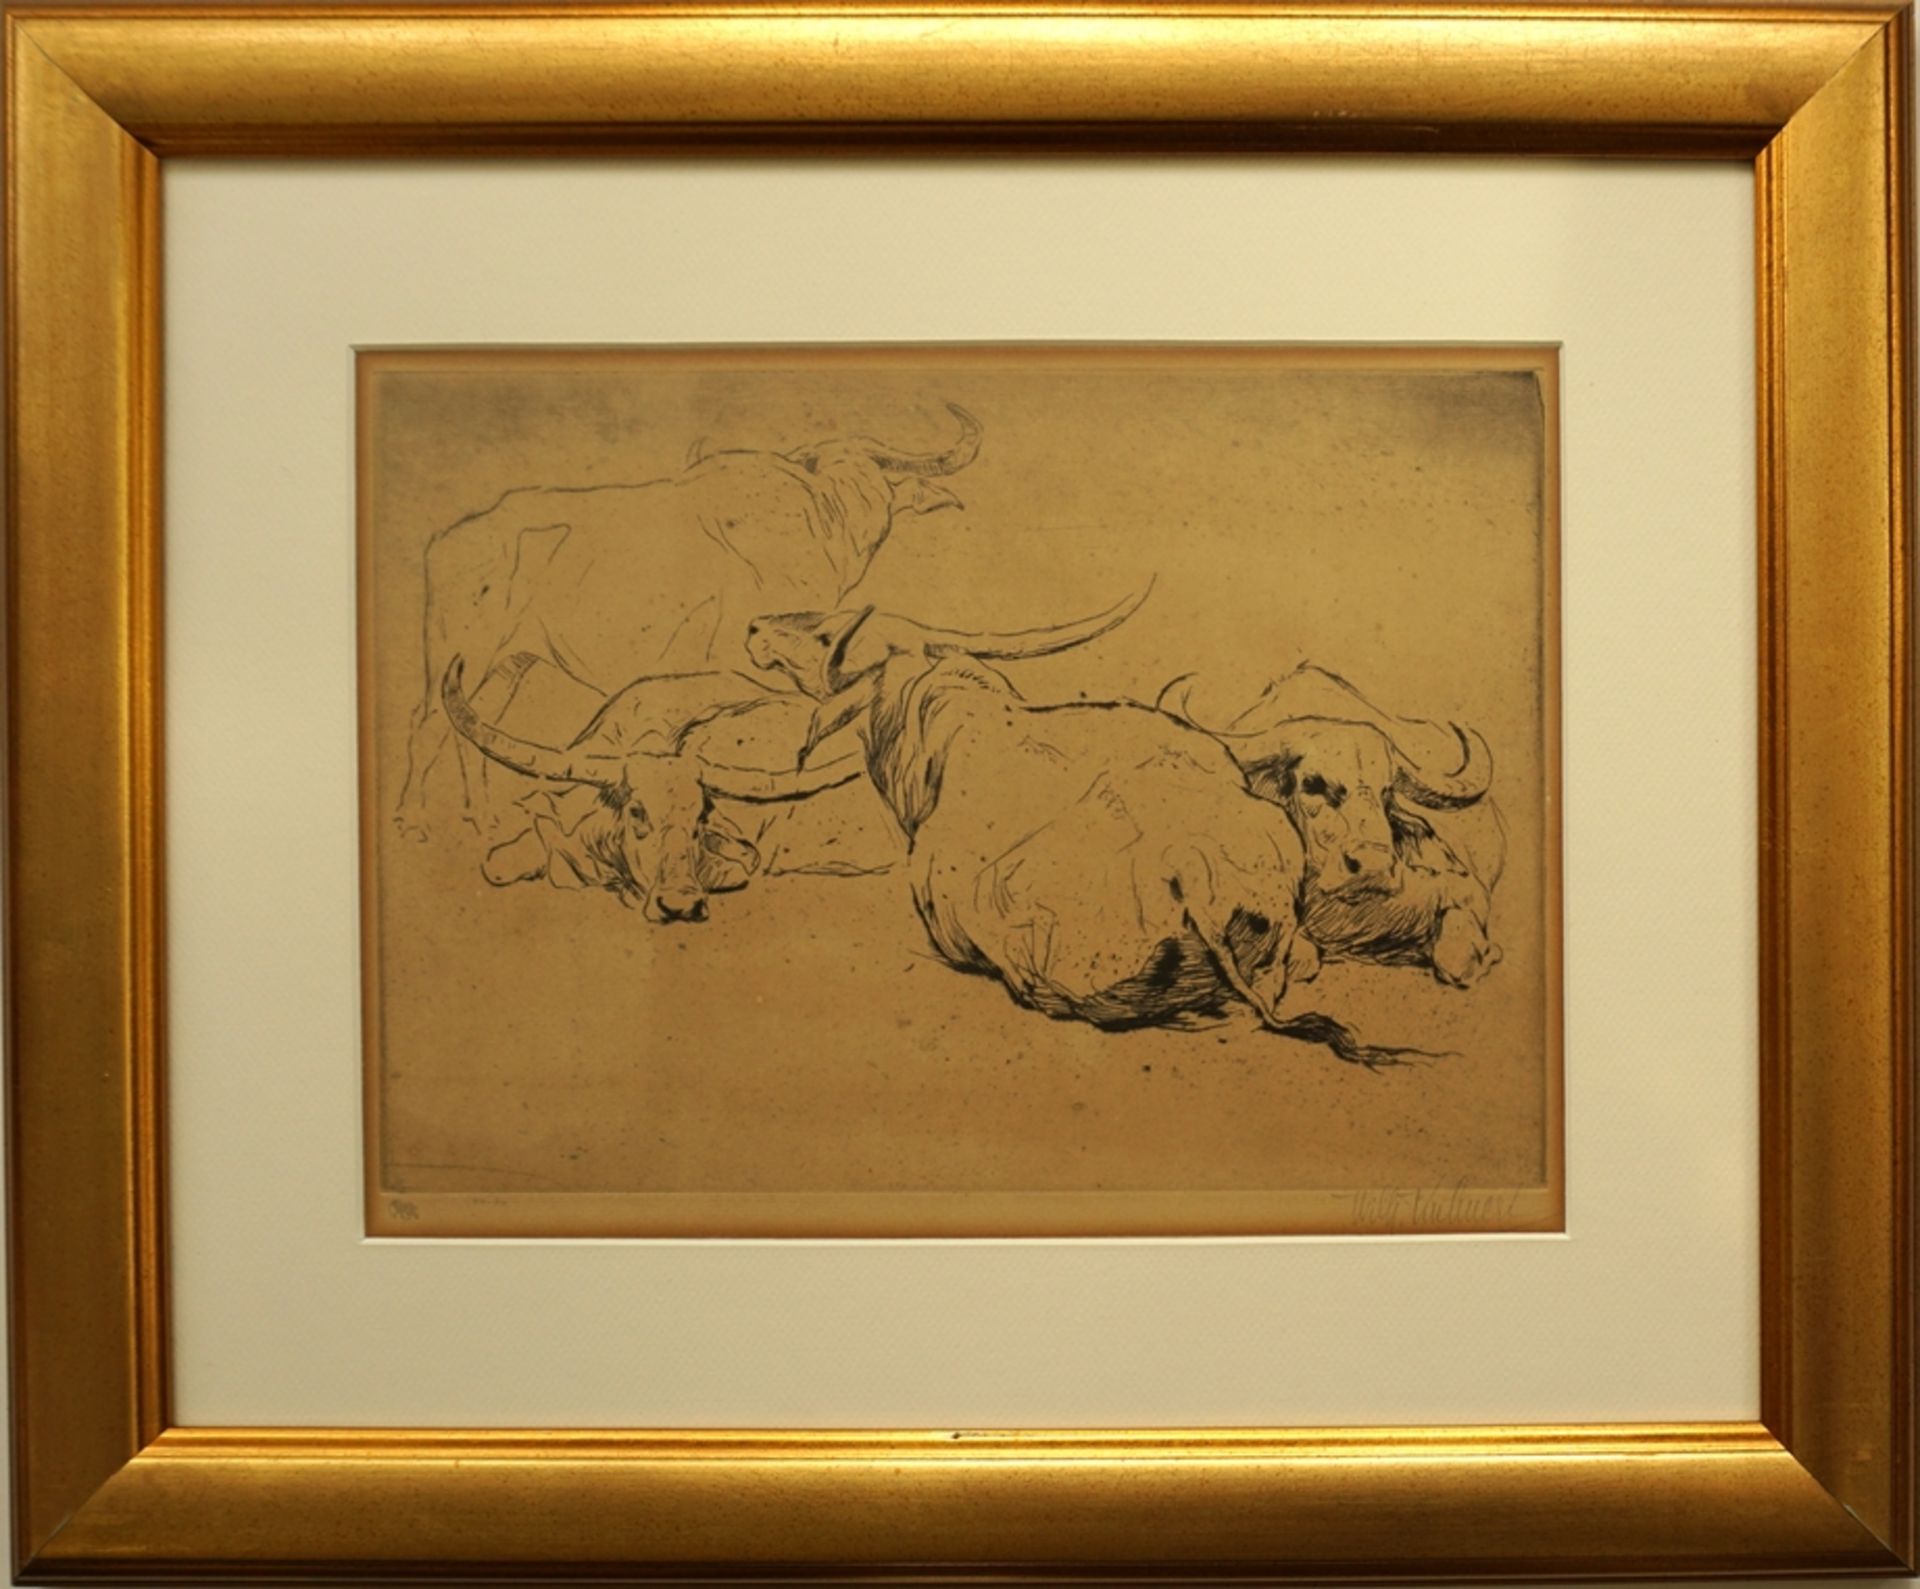 Wilhelm Kuhnert (1865, Oppeln - 1926, Flims), "Water Buffalo", etching - Image 2 of 4